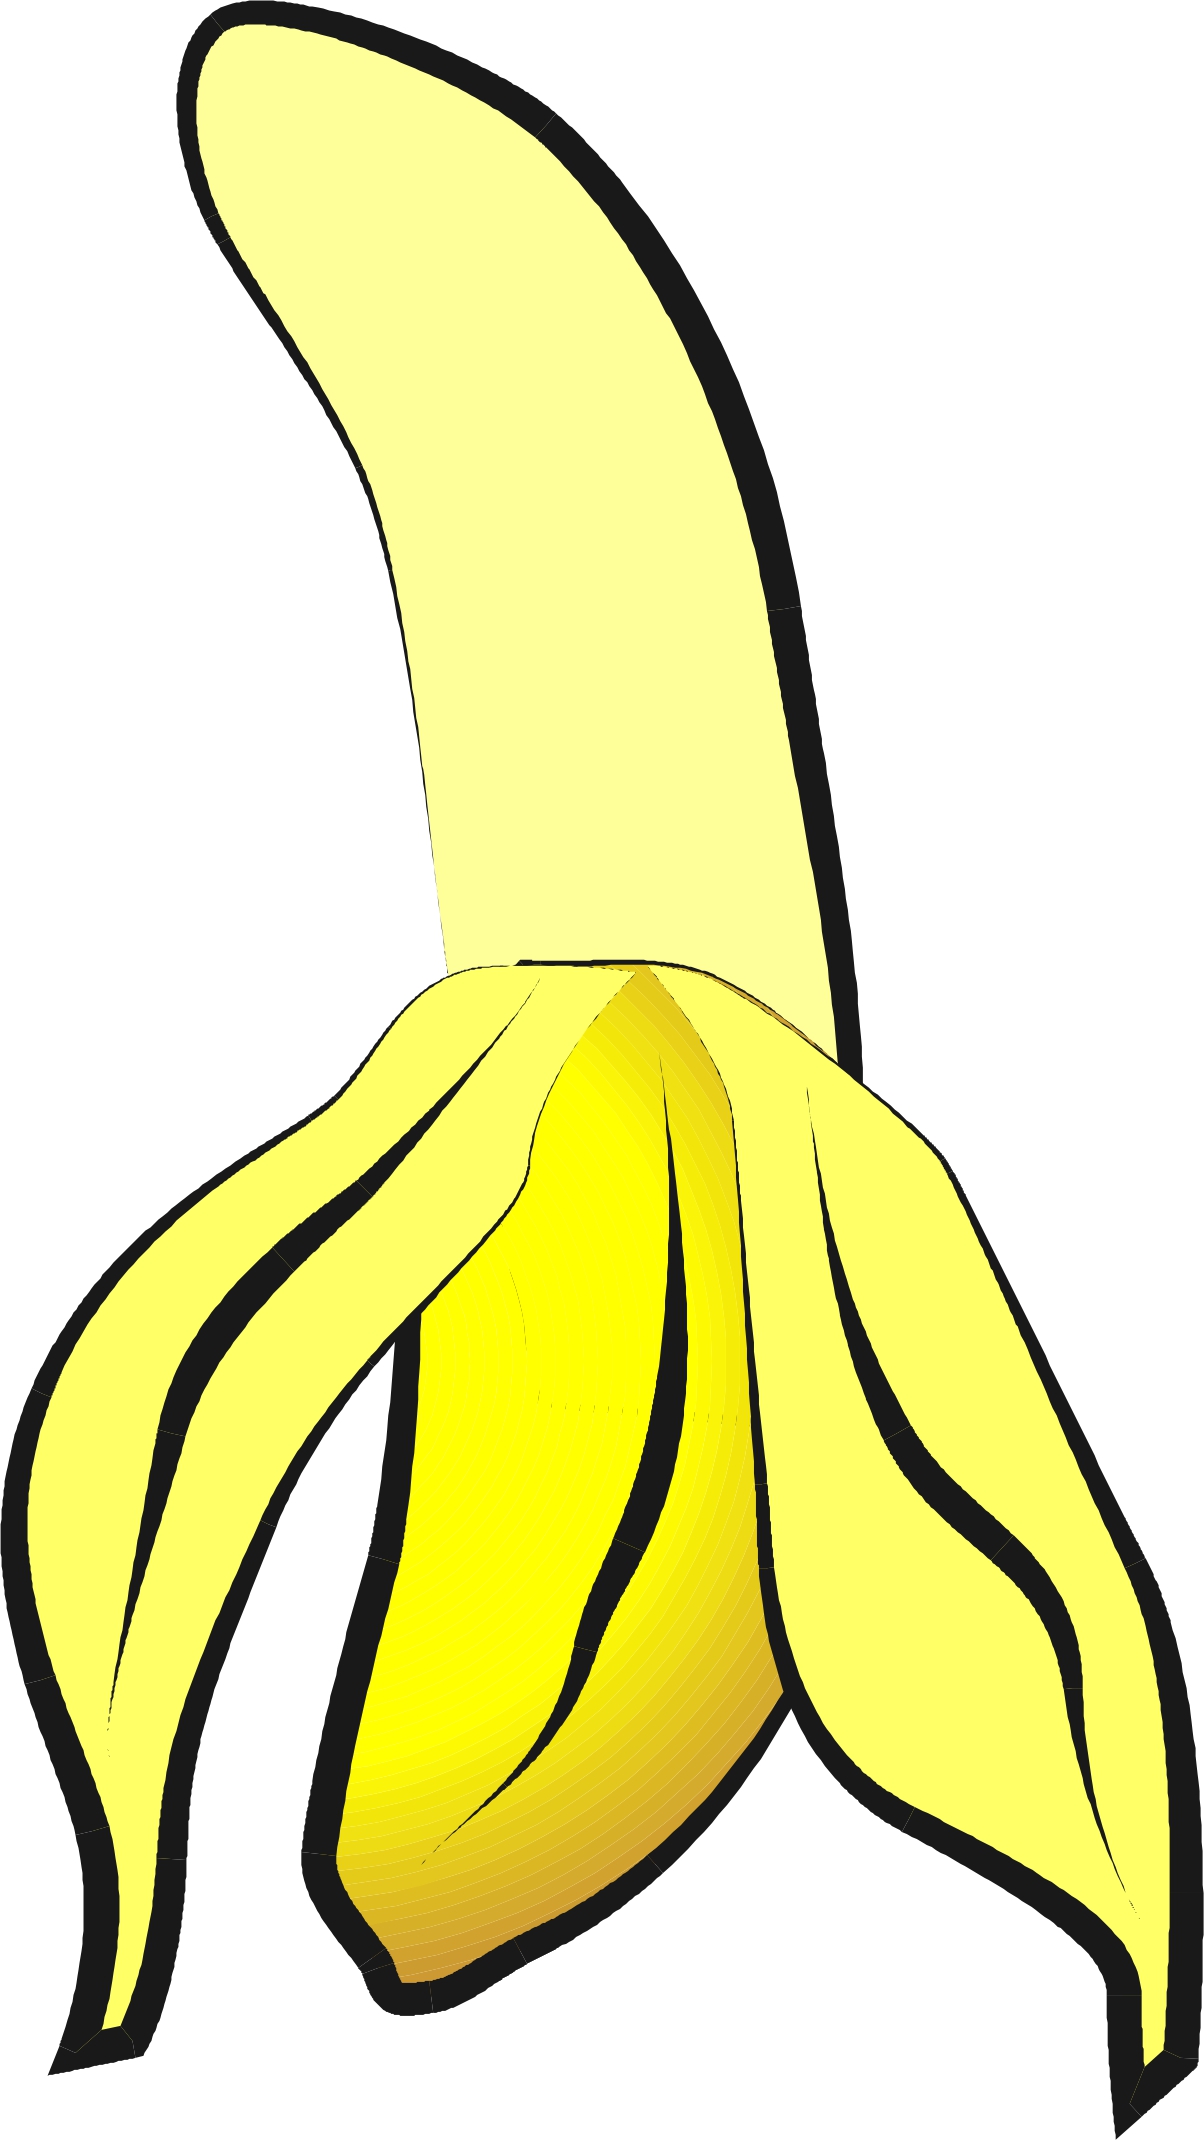 Cartoon Banana Images